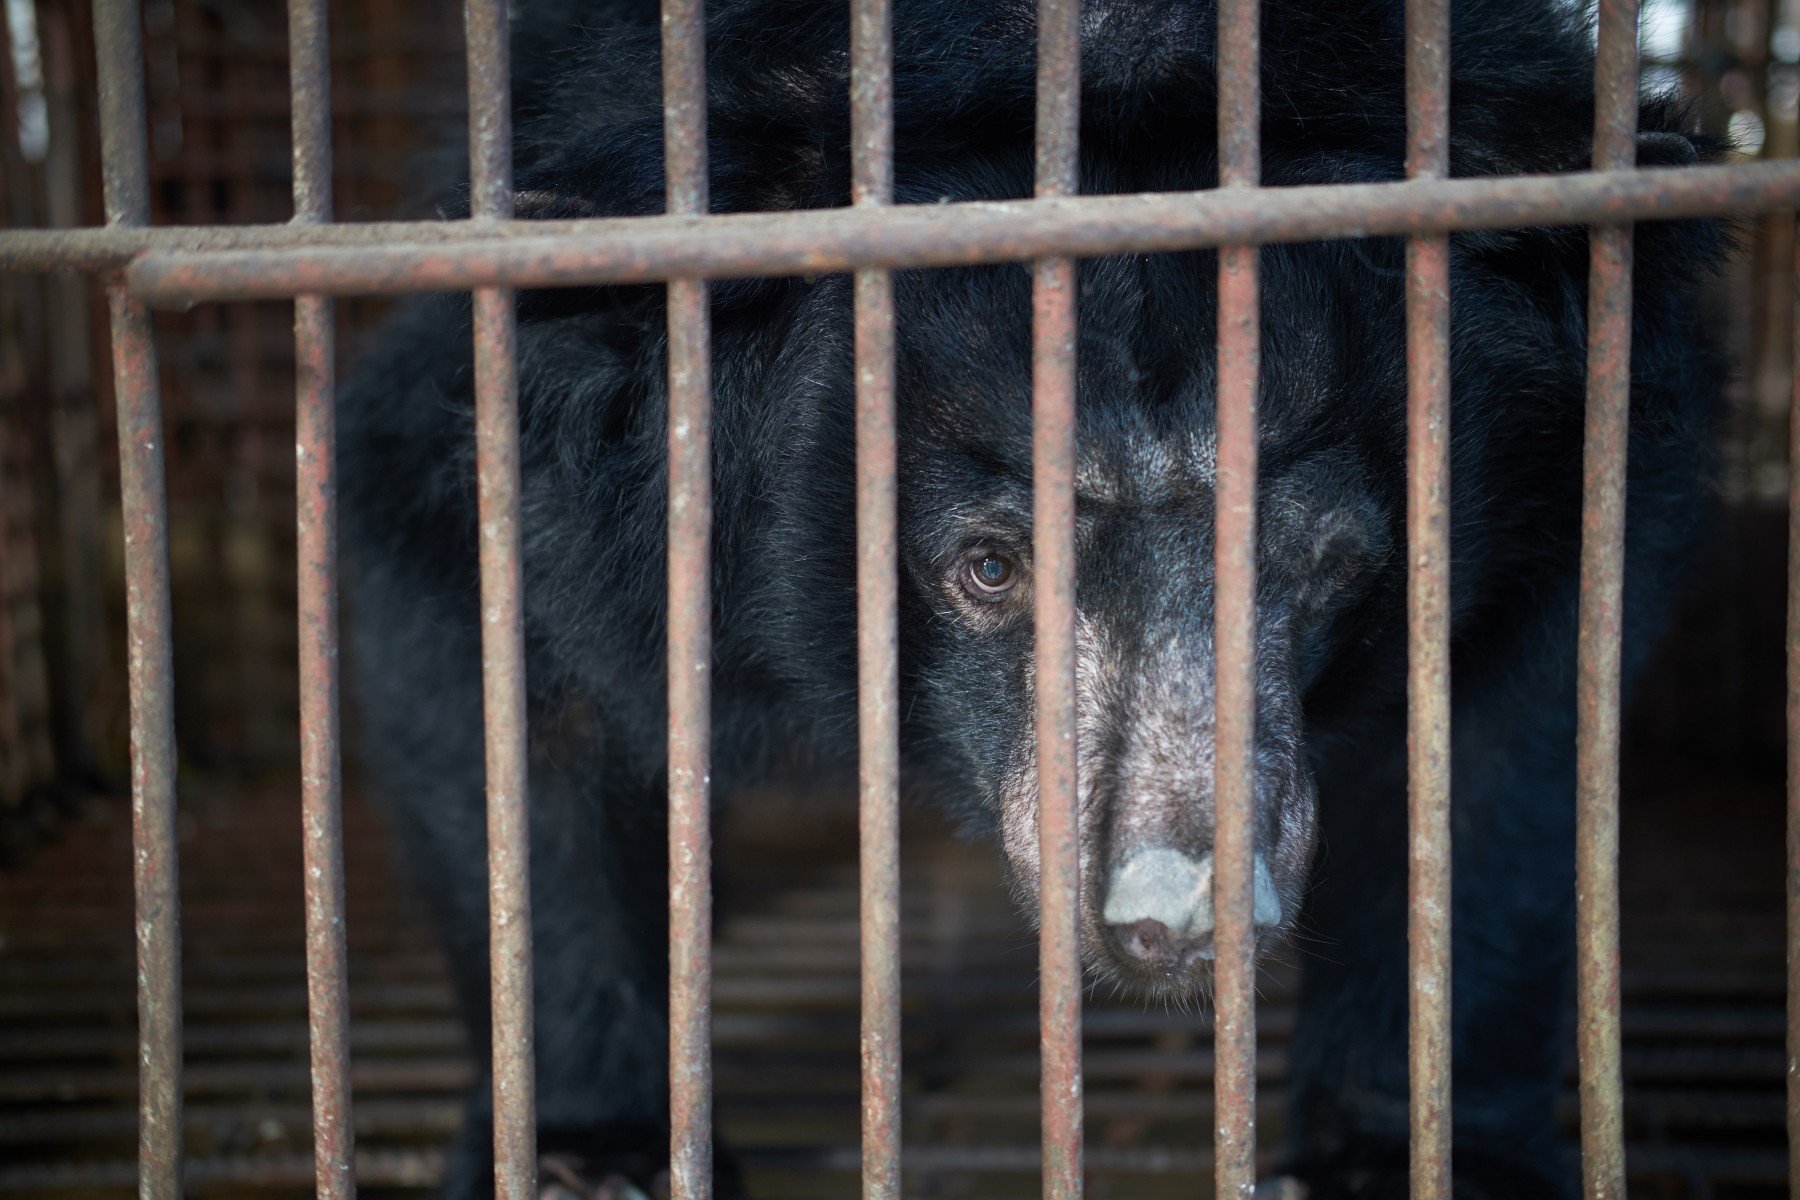 Bear in cage for bear bile.